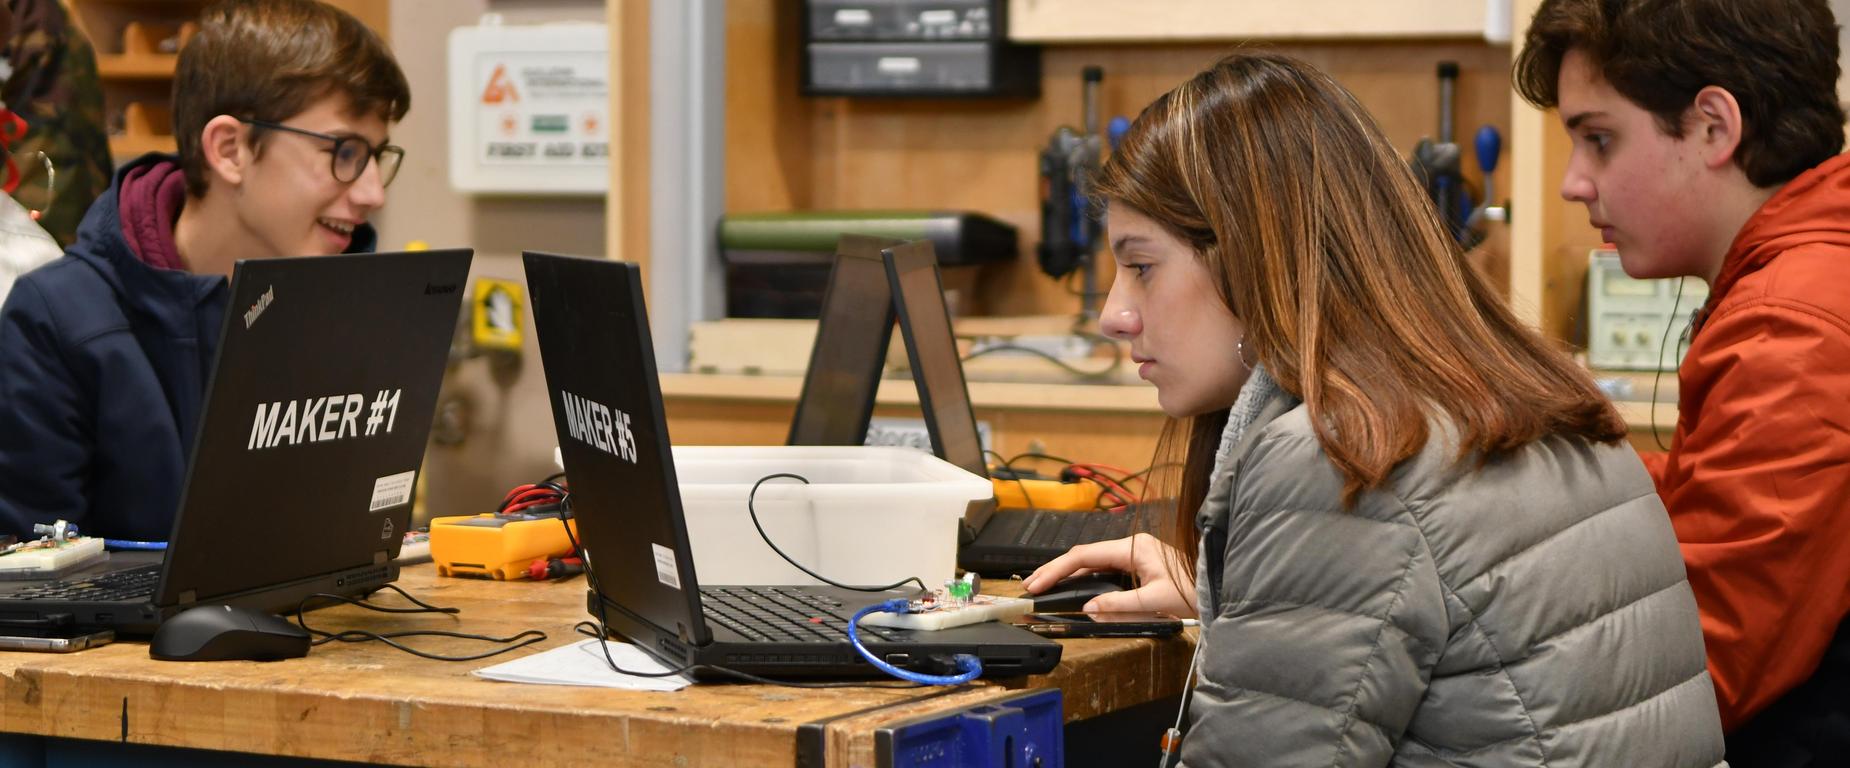 Maker students using laptops